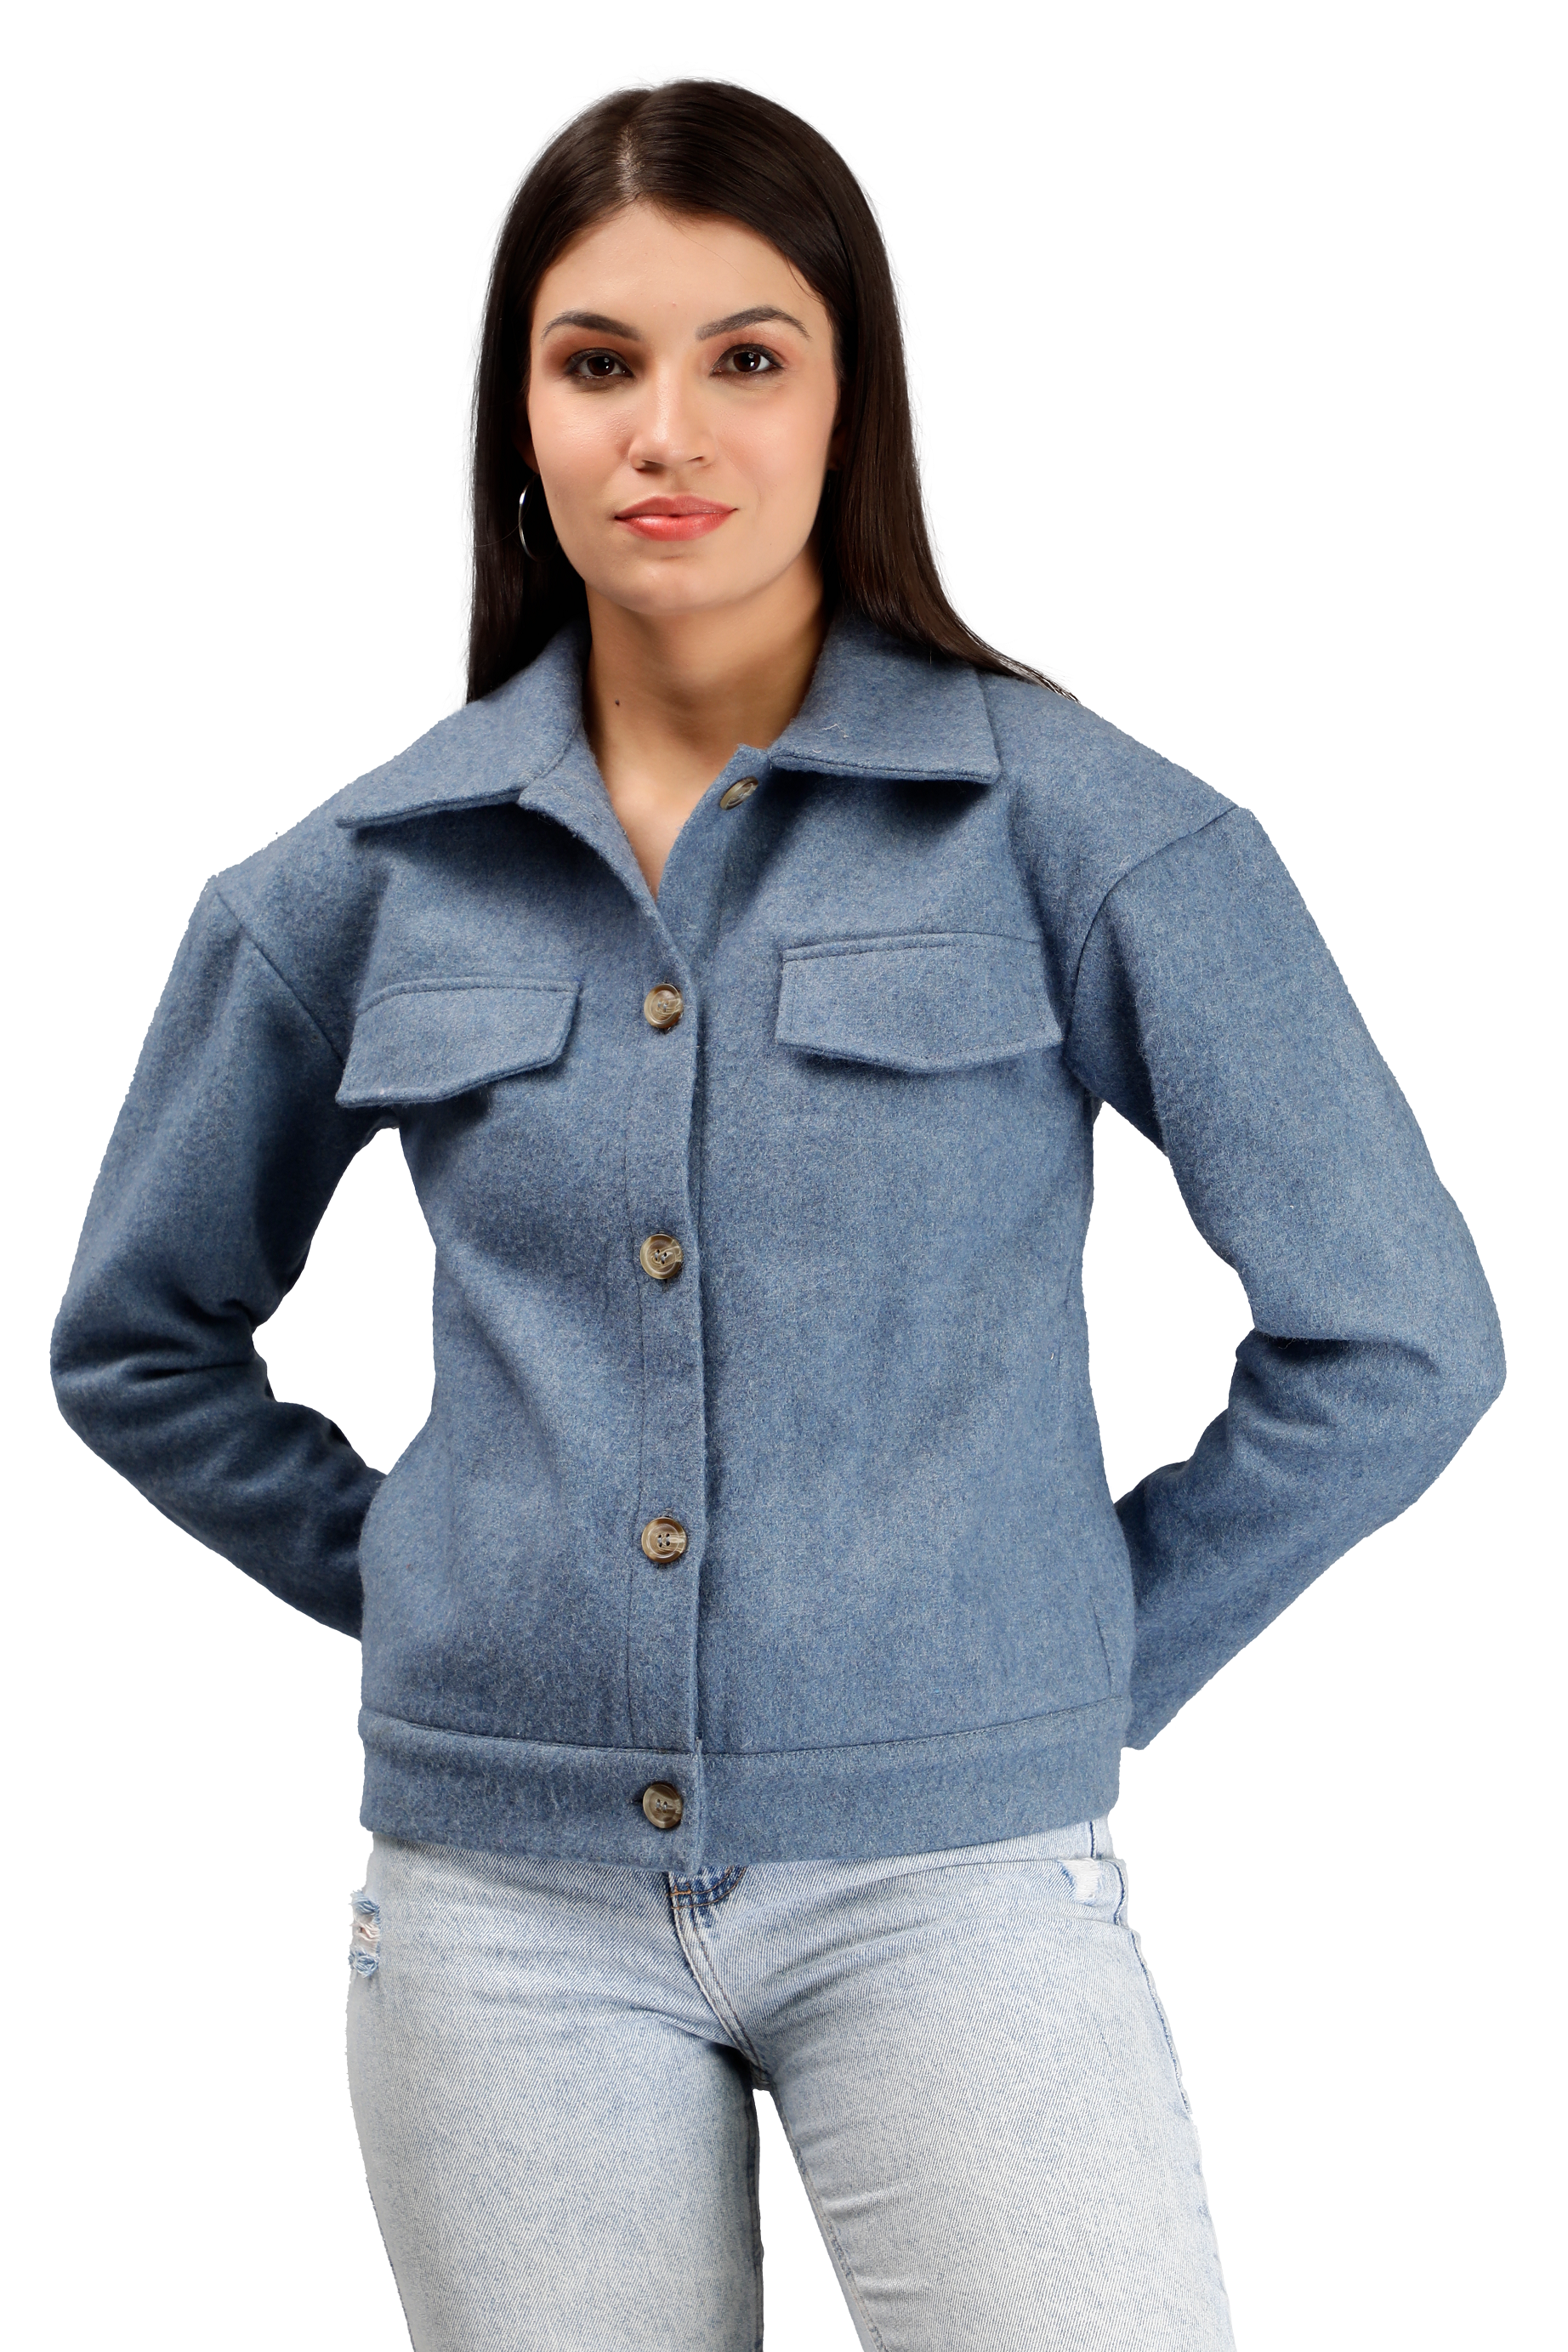 Miga Winter Blue Jacket for Women